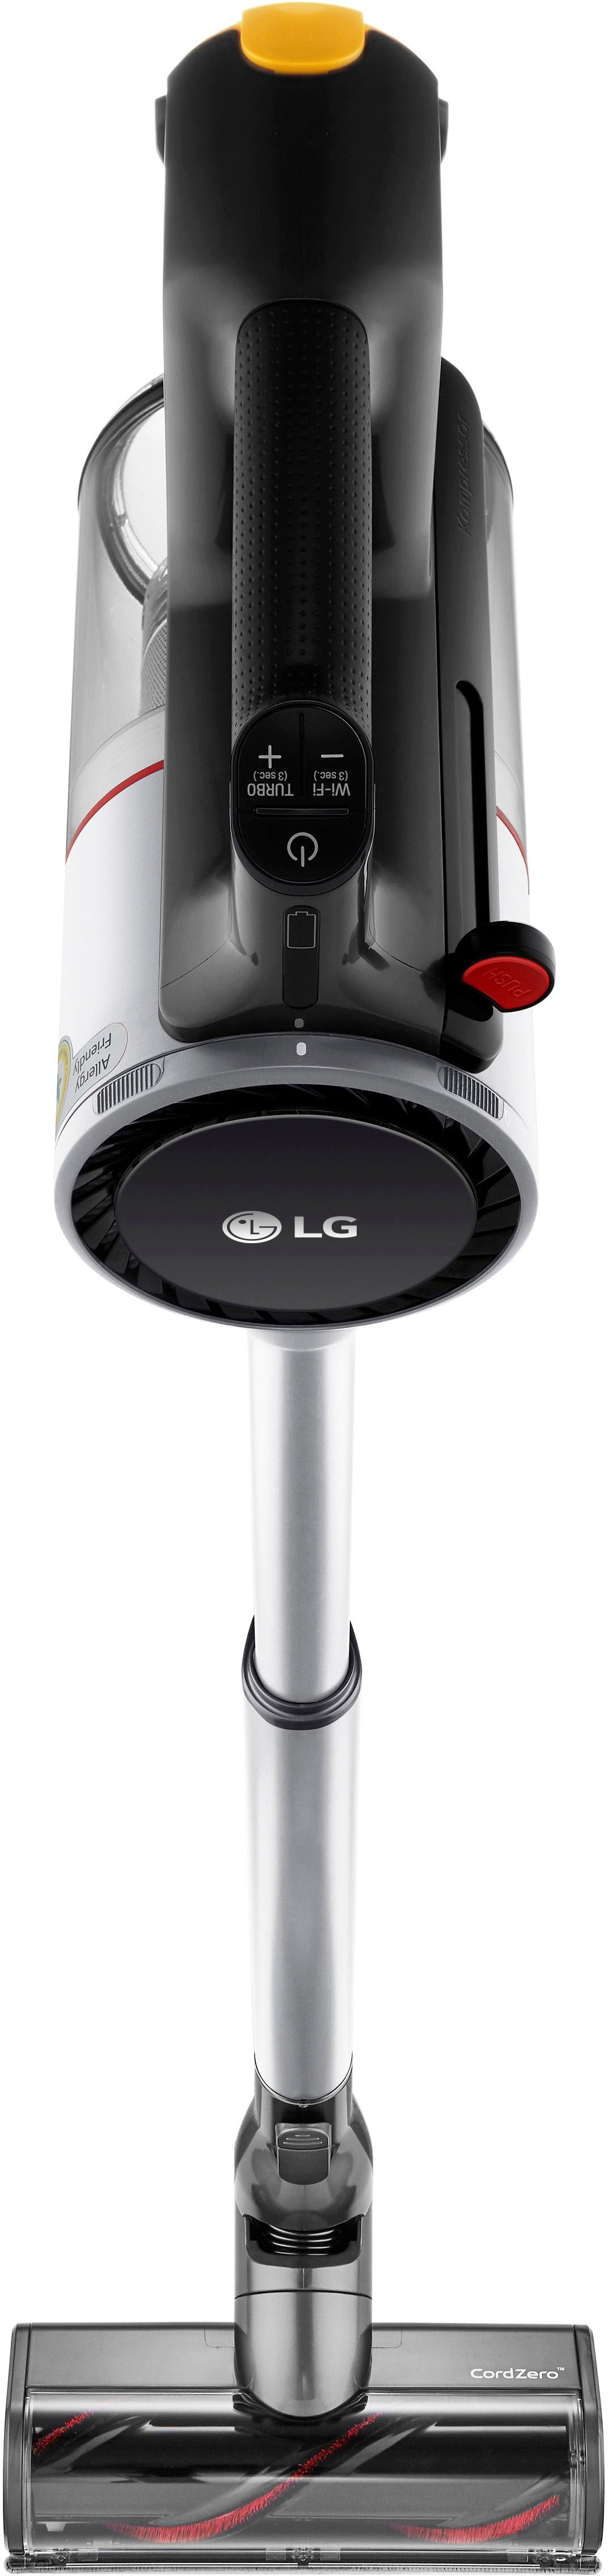 LG - CordZero Cordless Stick Vacuum with Kompressor technology - Matte Silver_3